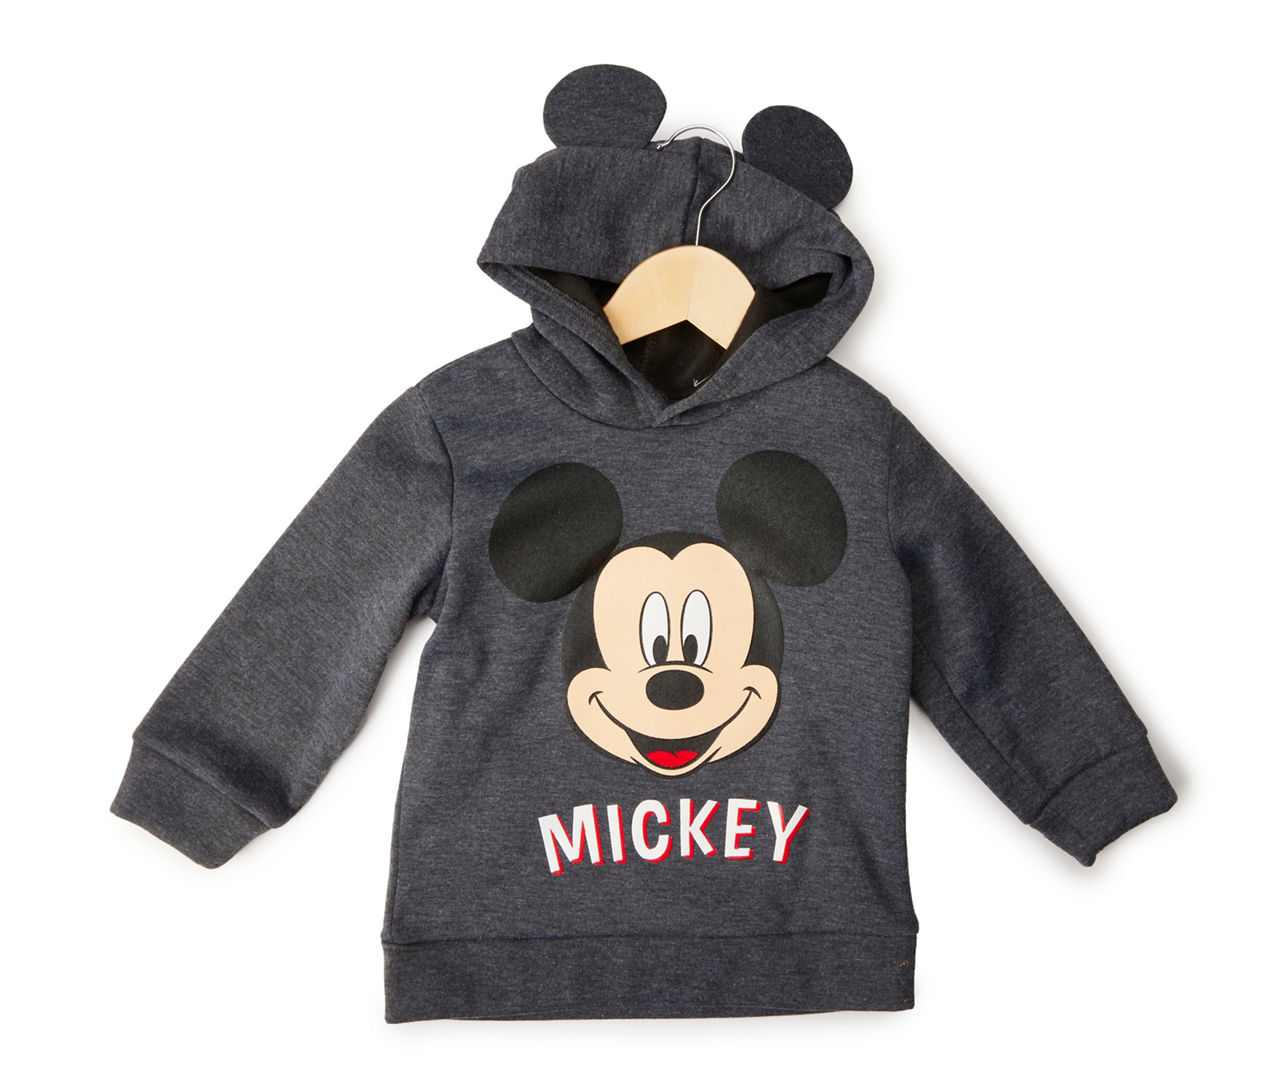 Kids' Size 4 "Mickey" Gray Ears Hoodie